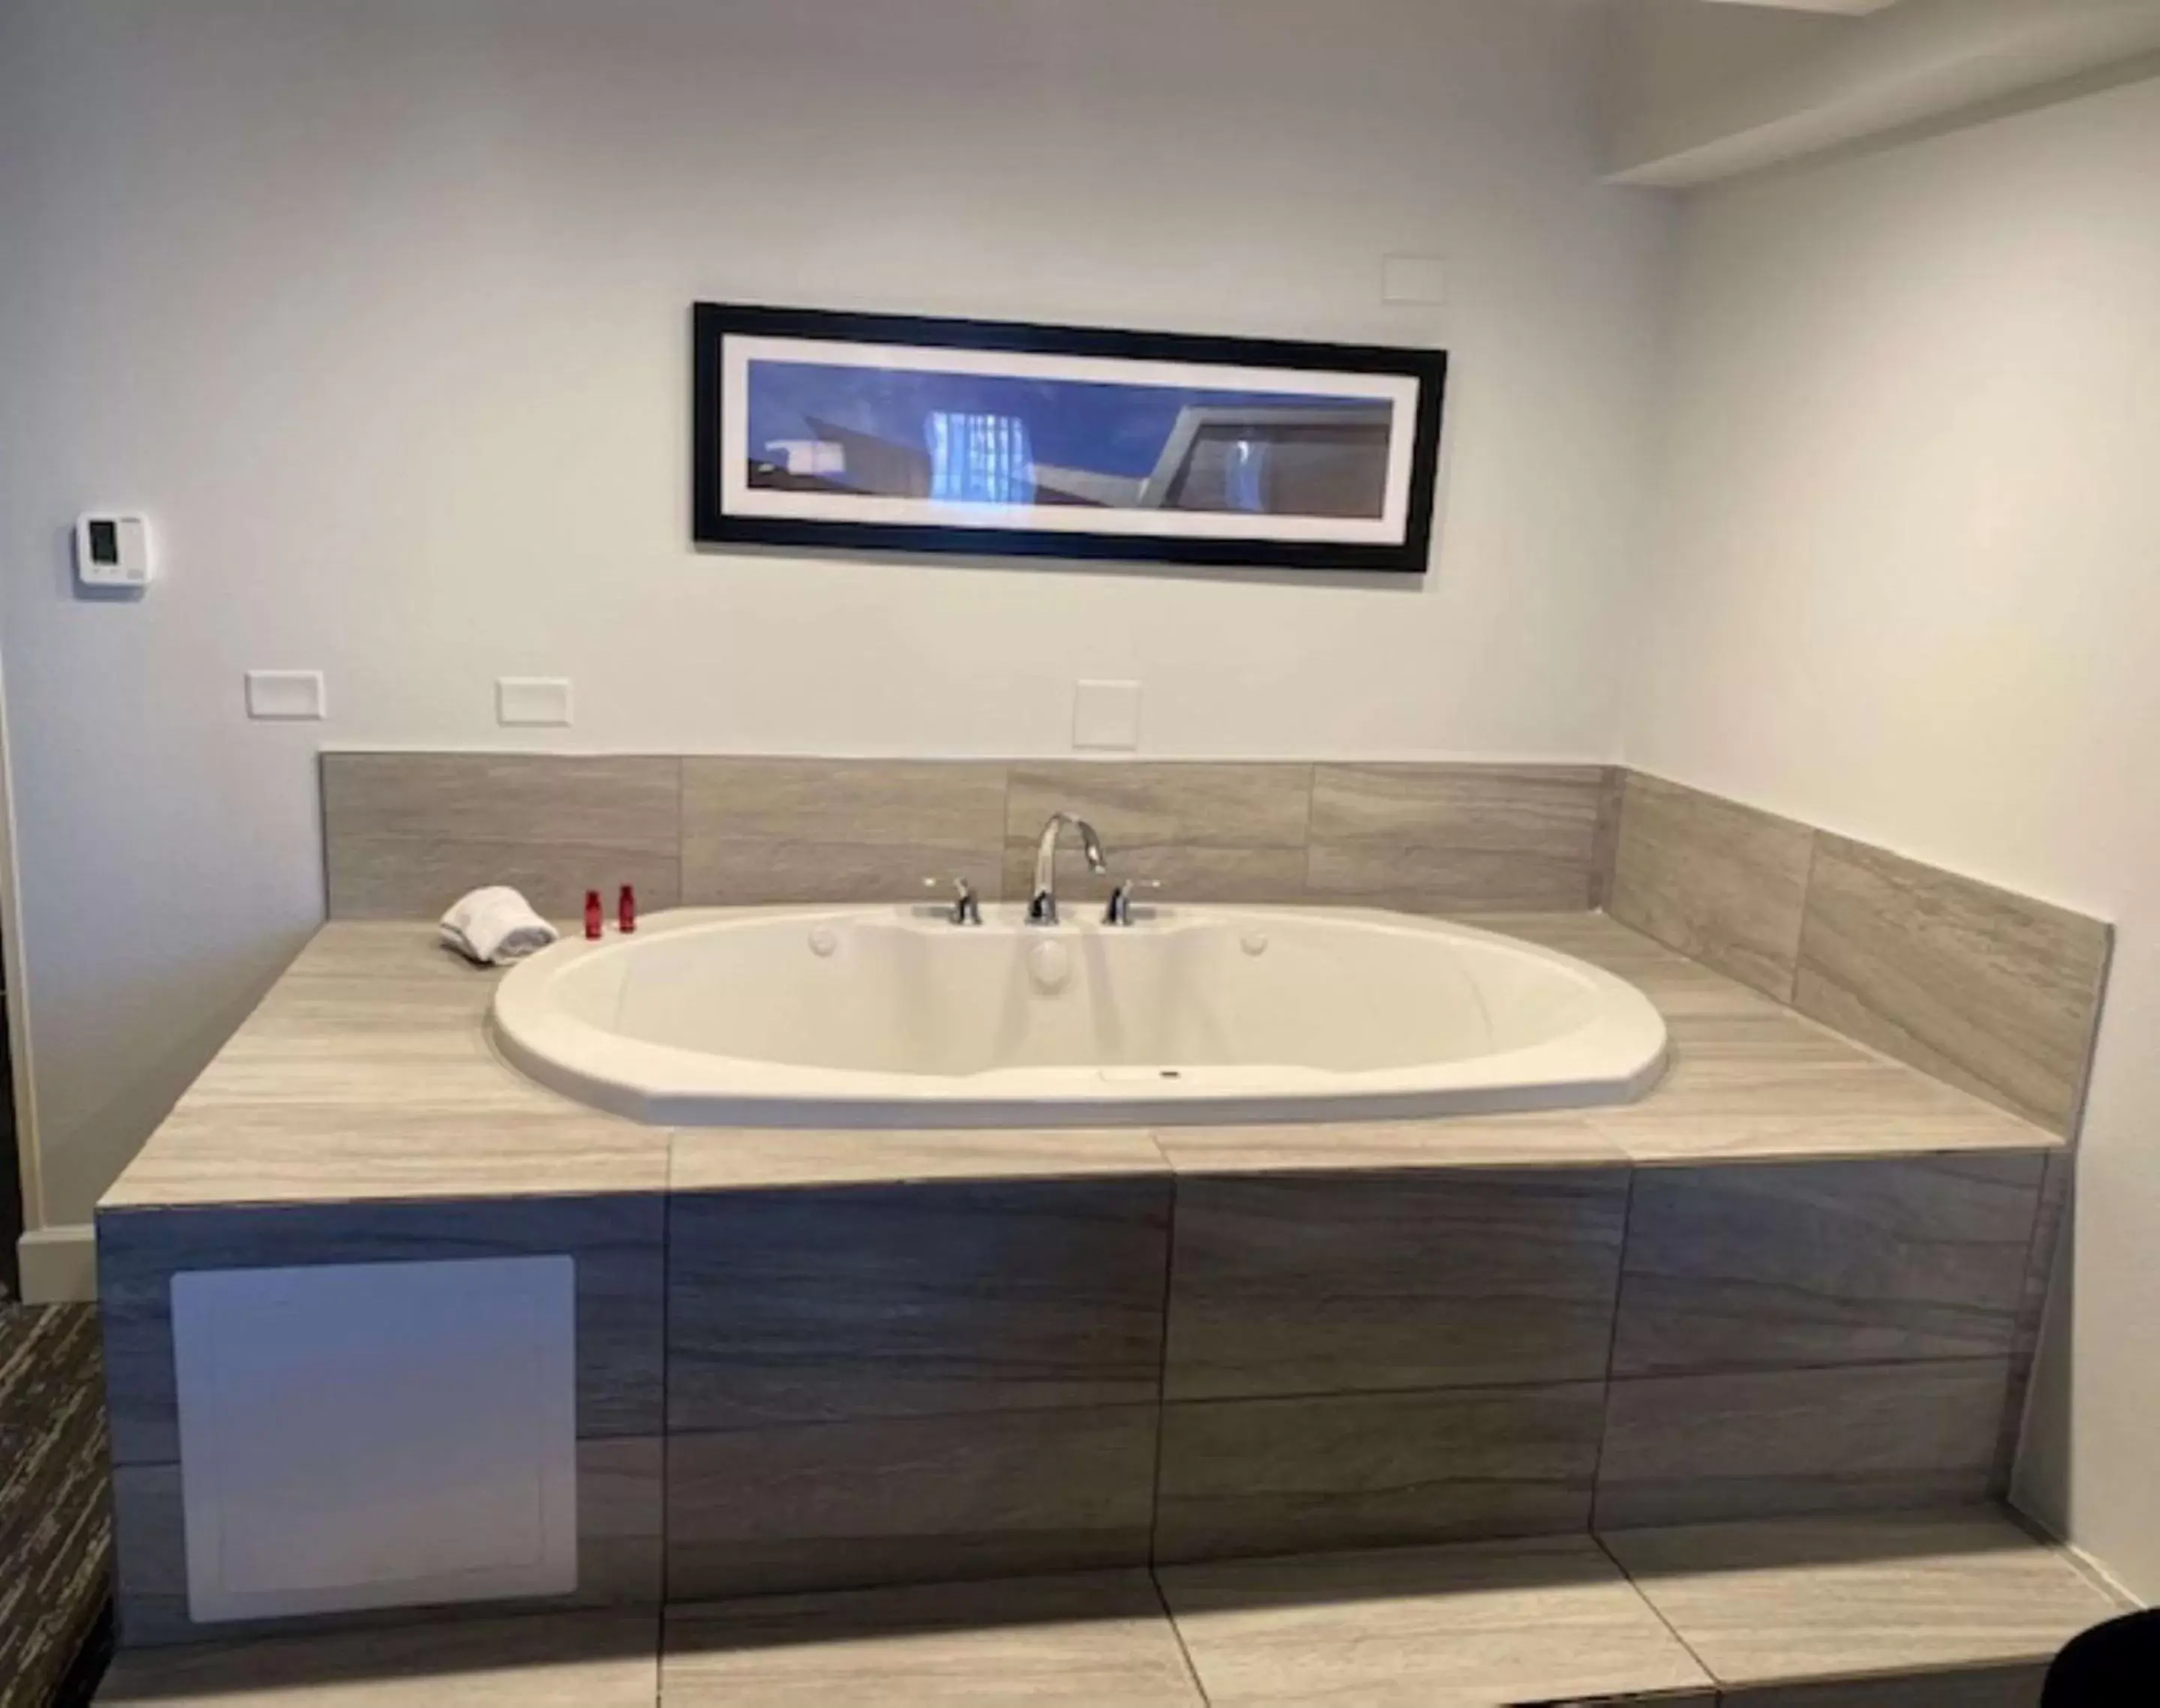 Photo of the whole room, Bathroom in Best Western Premier Denver East